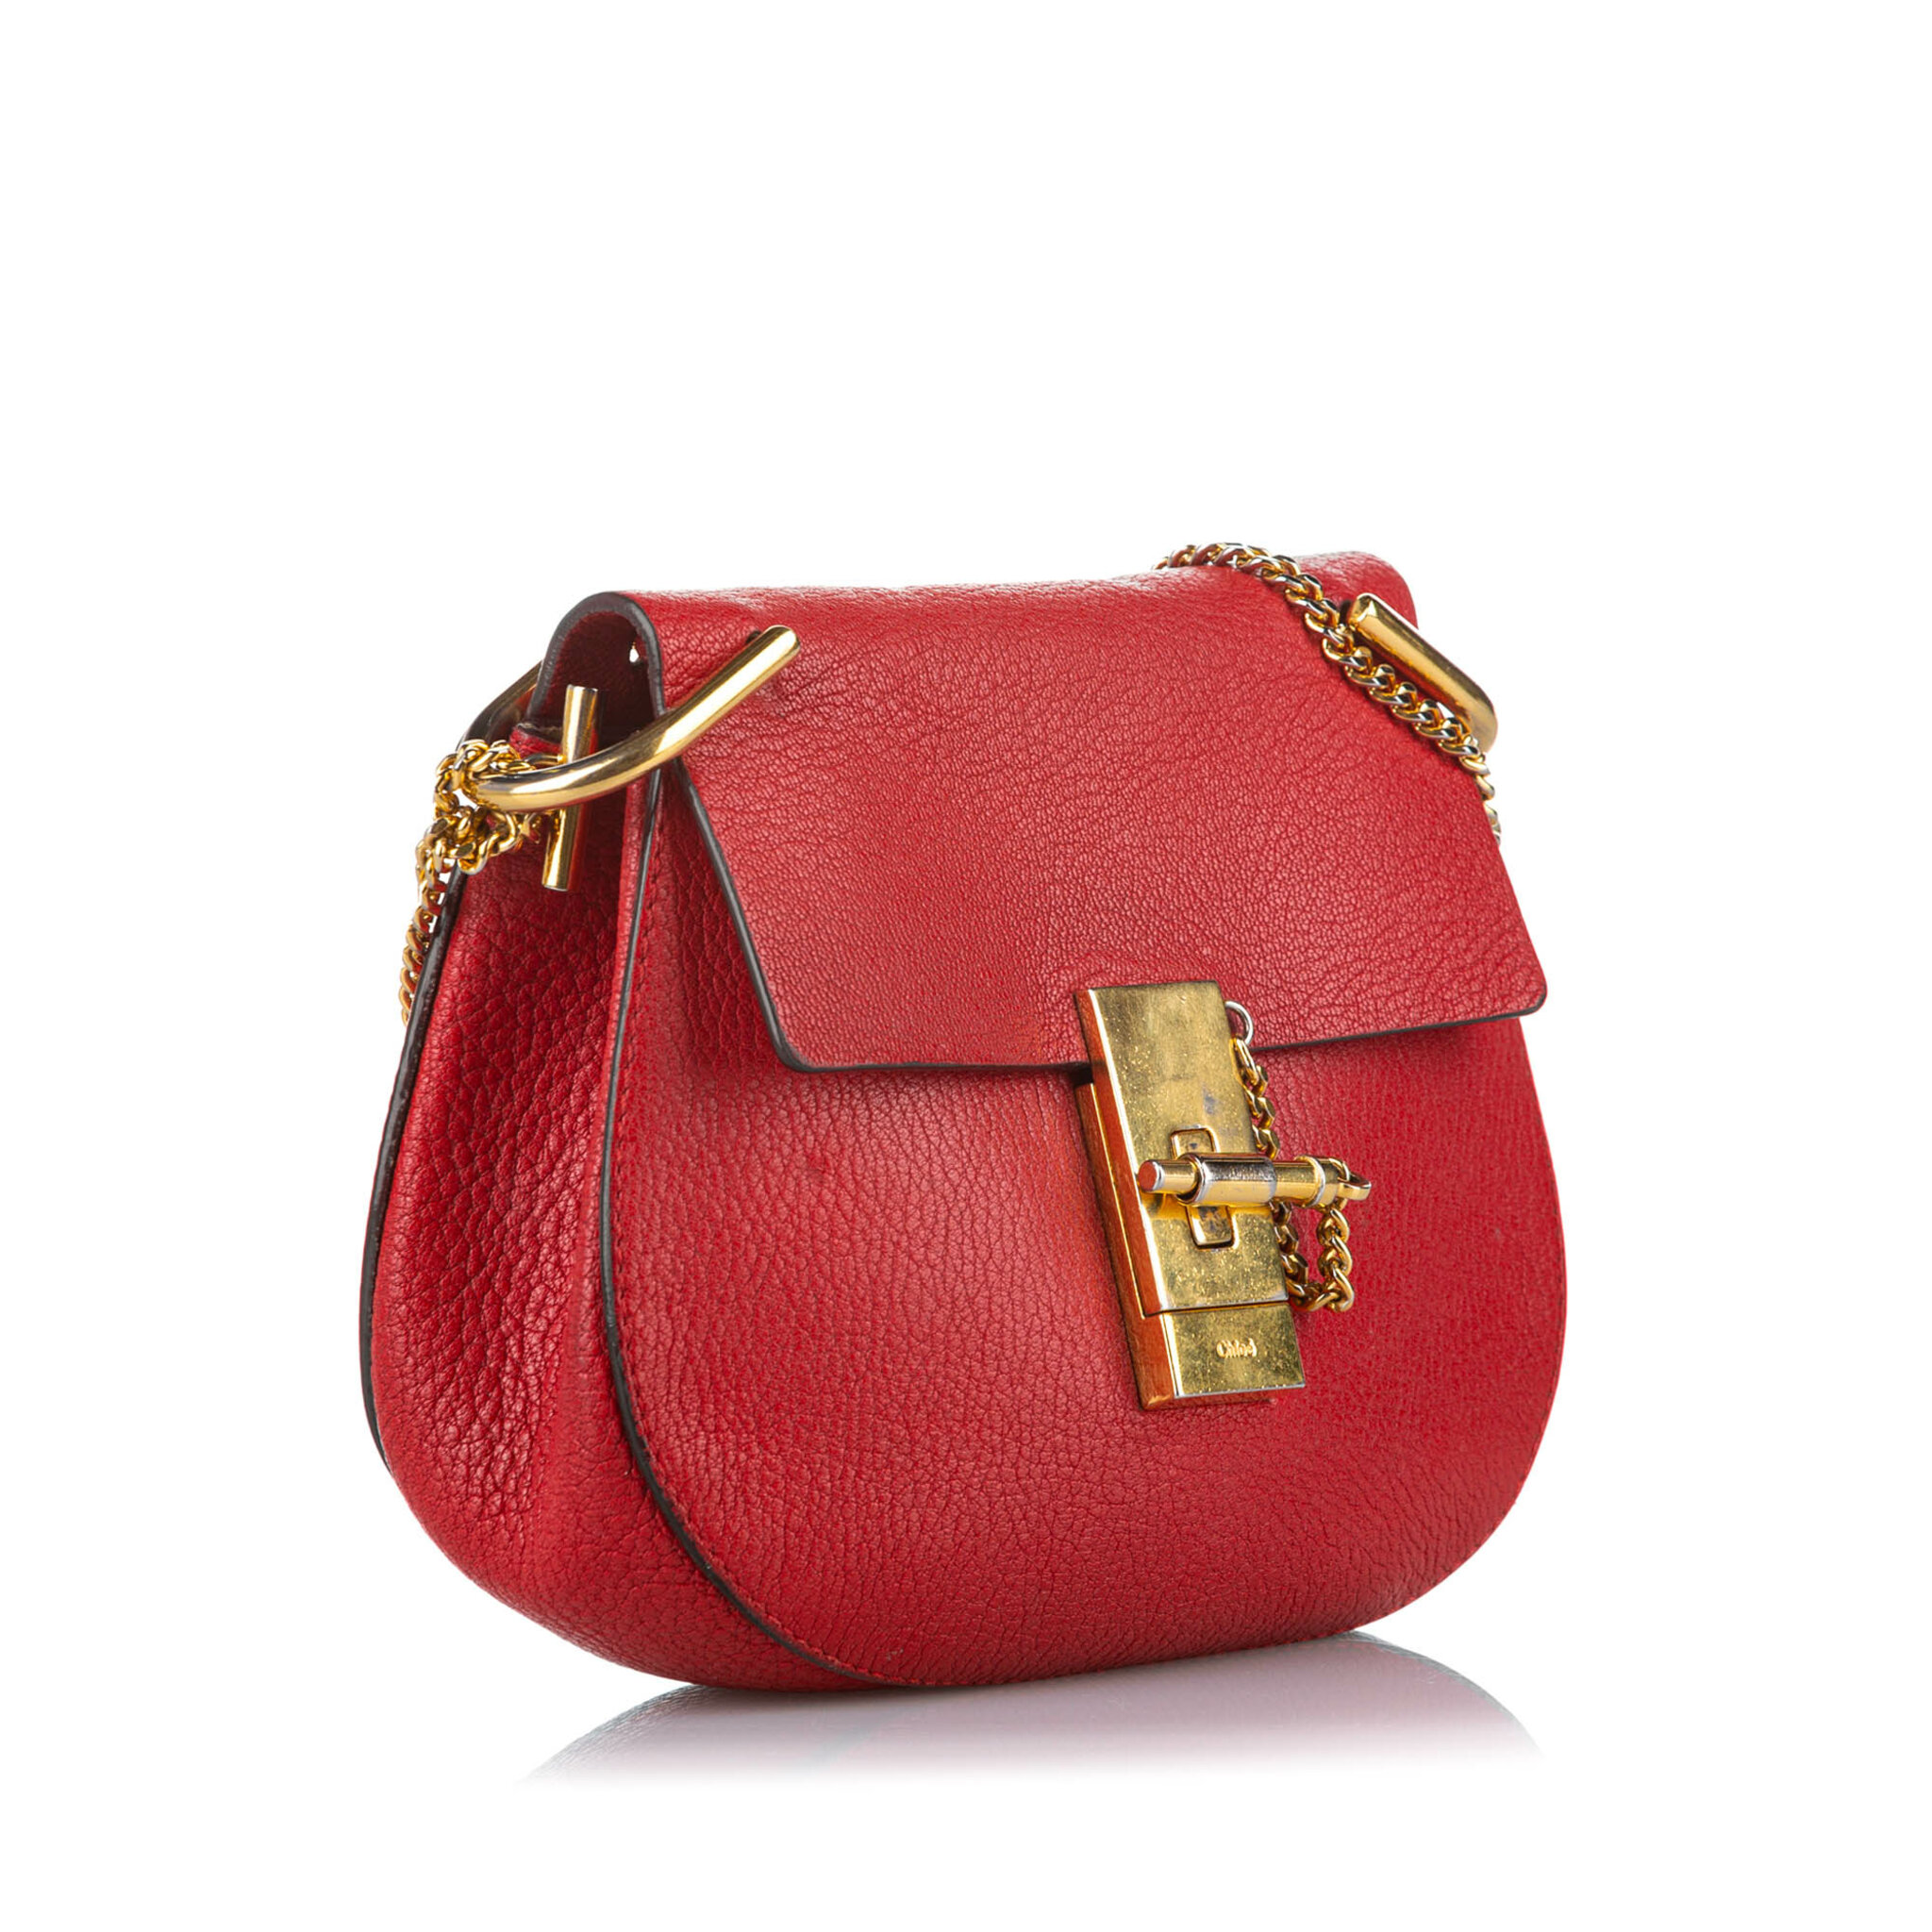 Chloe Drew Leather Crossbody Bag, red